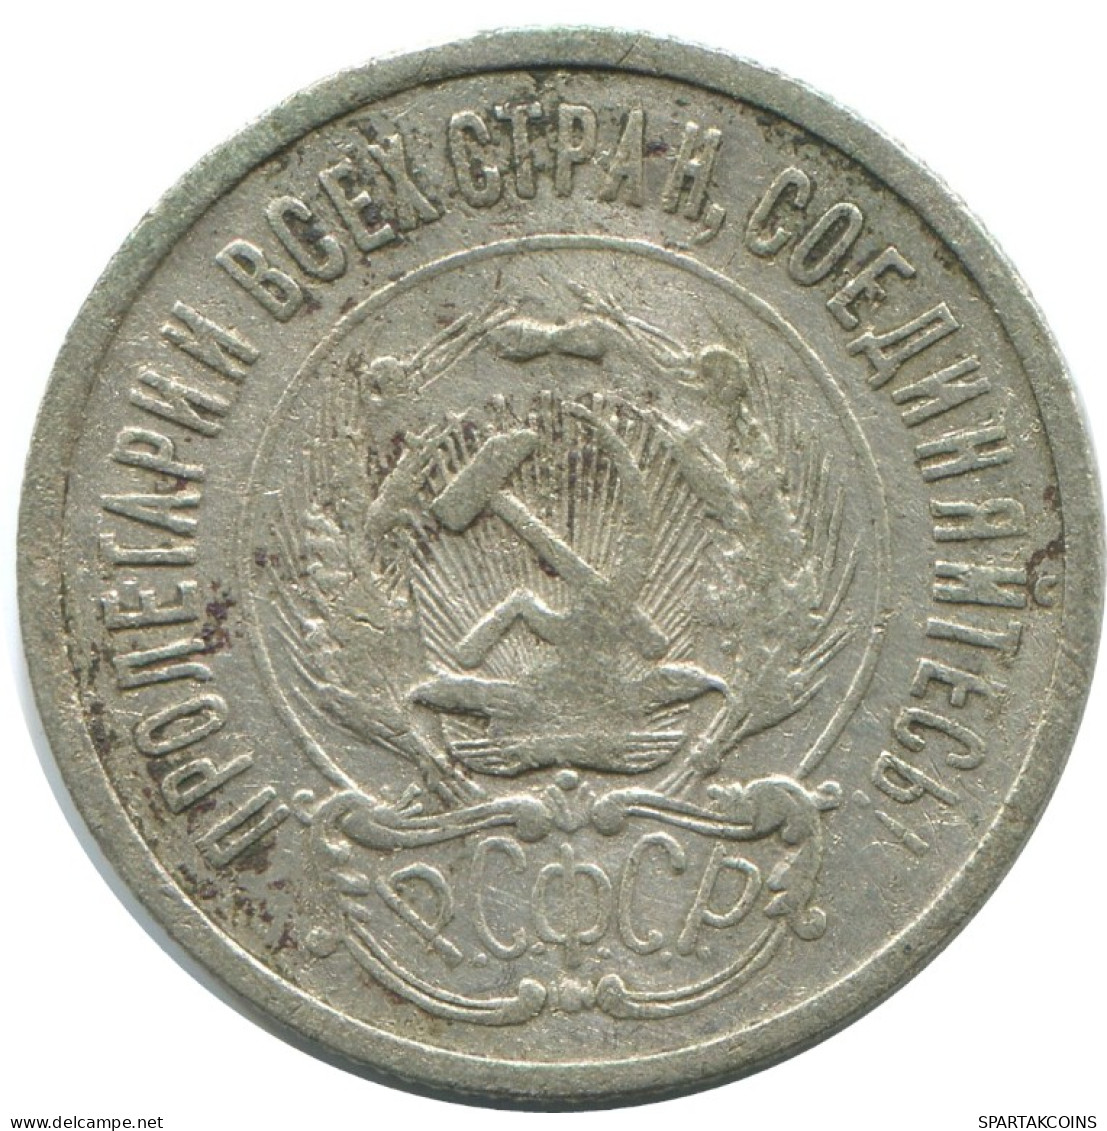 20 KOPEKS 1923 RUSSIA RSFSR SILVER Coin HIGH GRADE #AF441.4.U.A - Russia